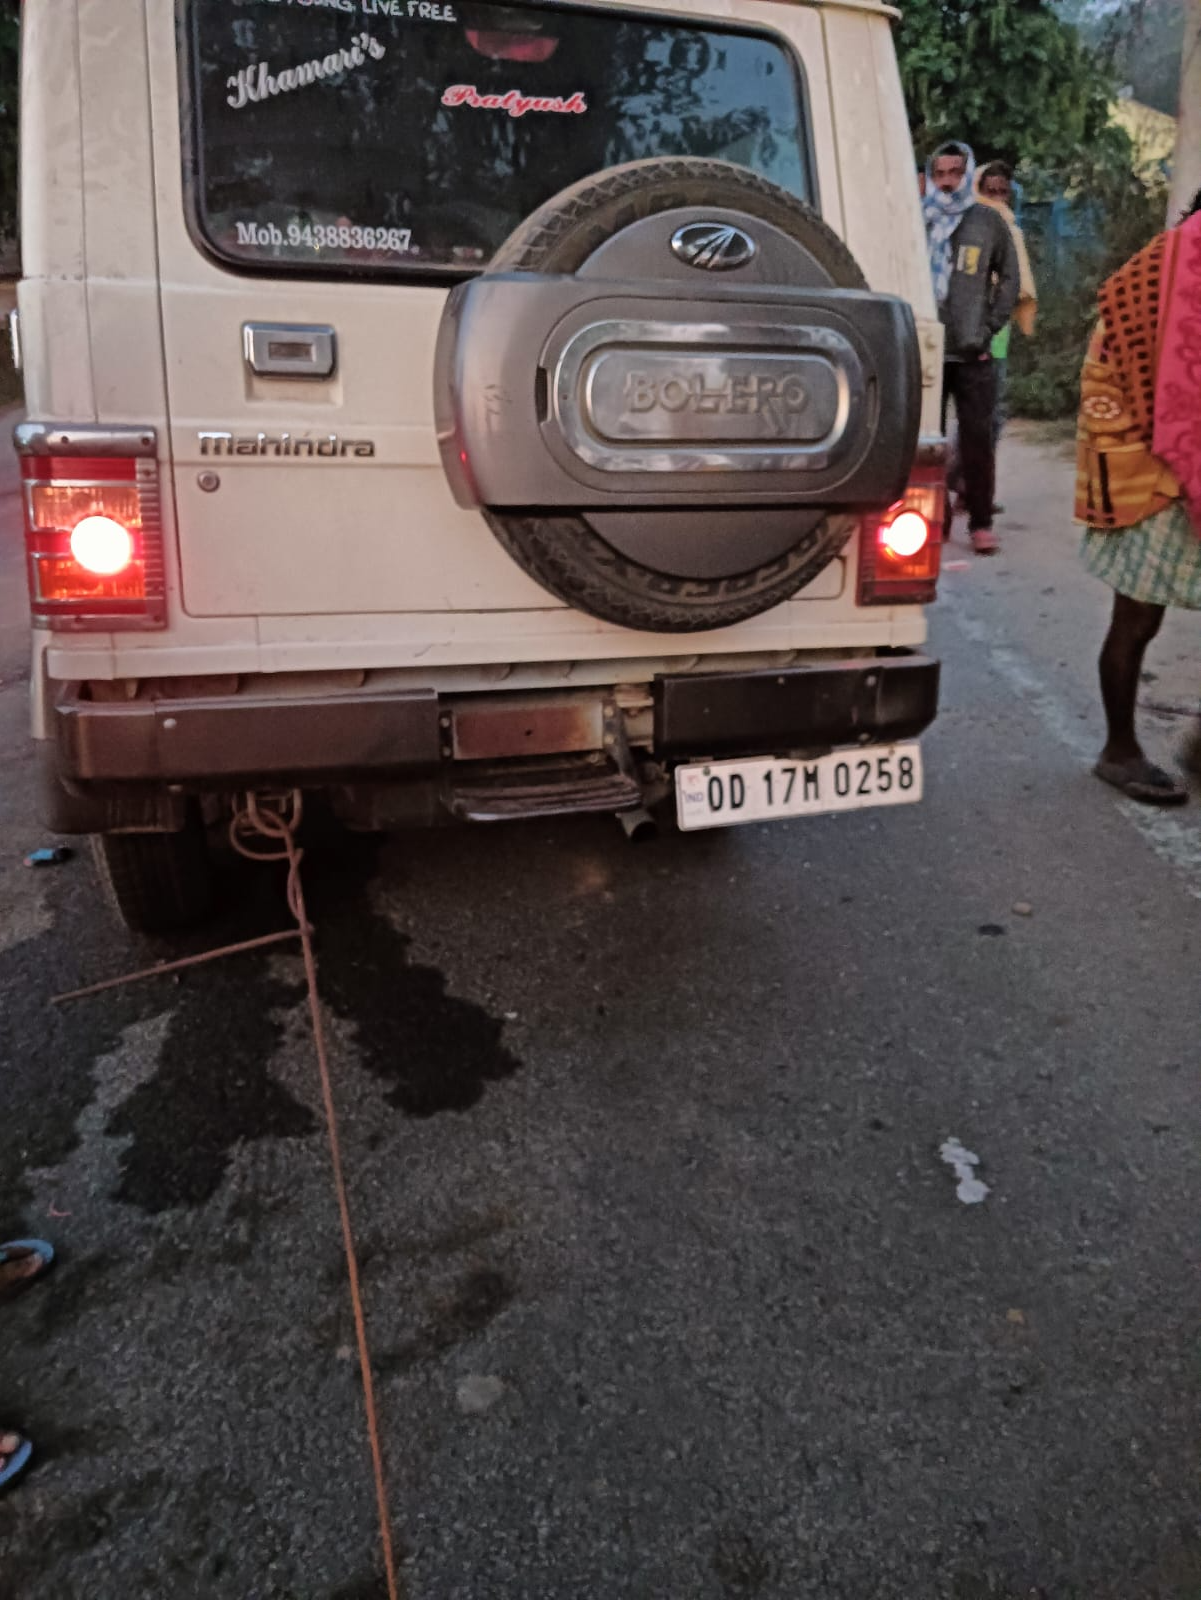 Girl crushed to death under school bus at Khandagiri Square in Bhubaneswar